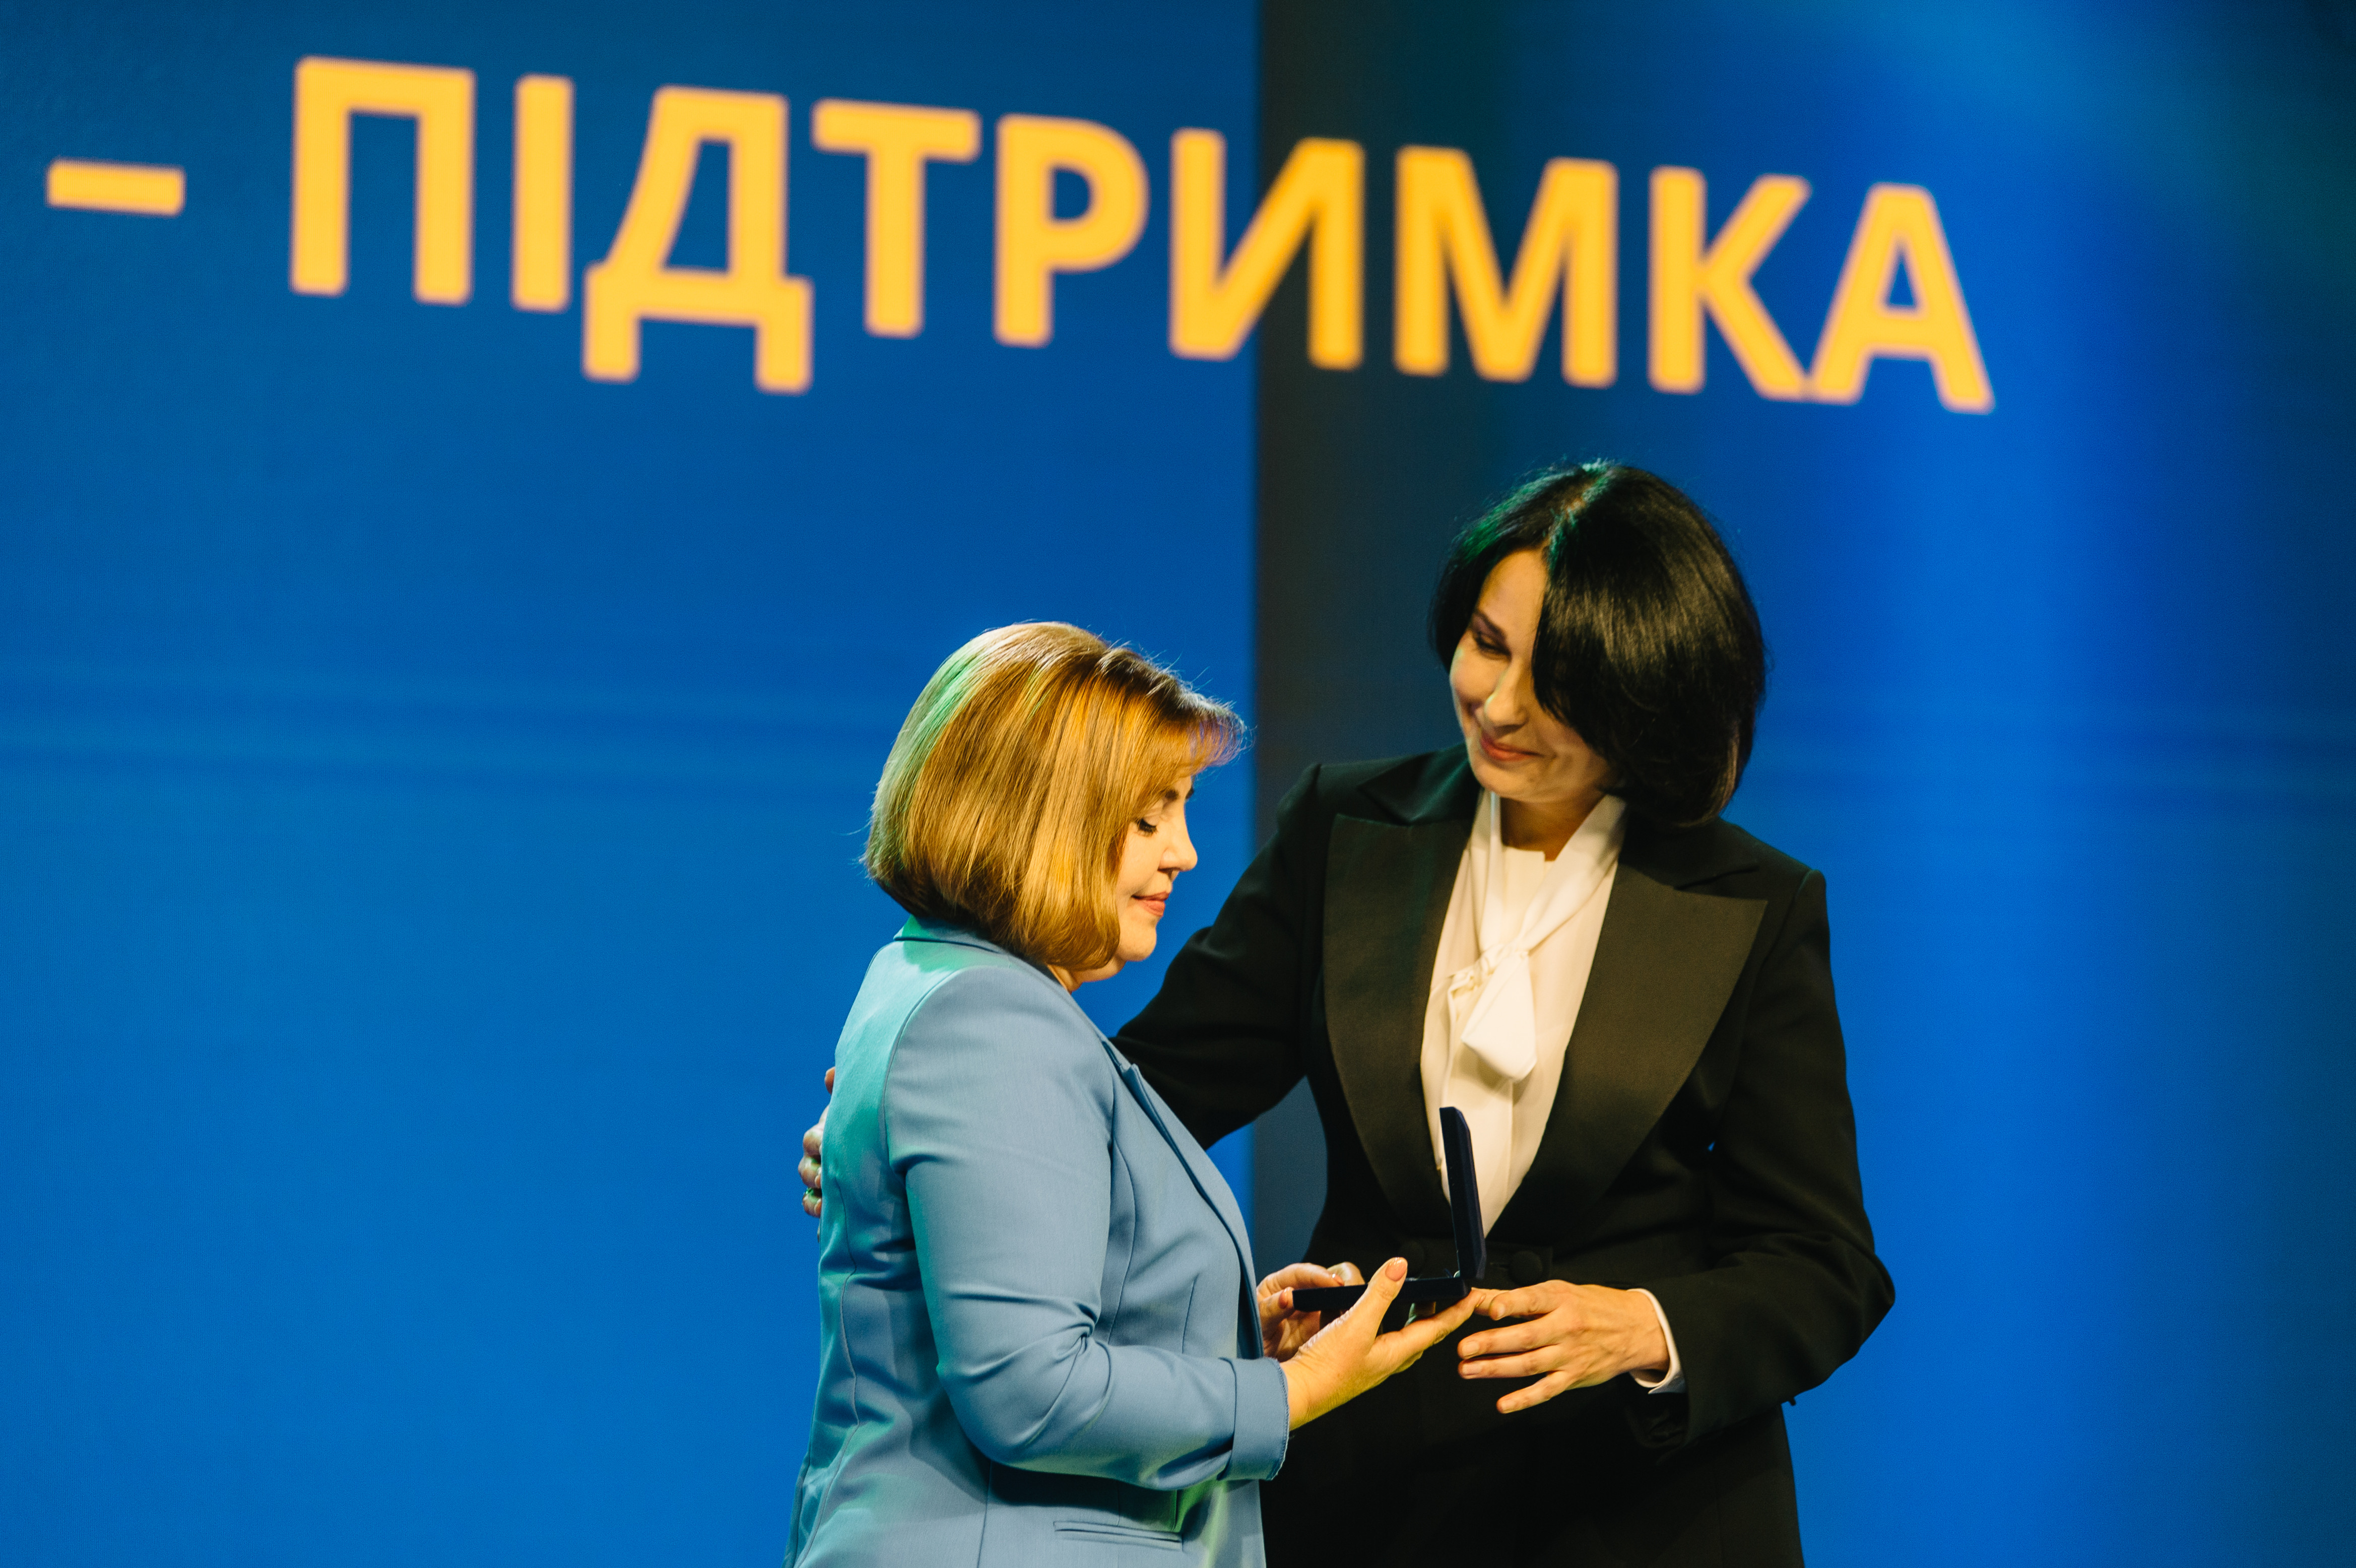 Наталия Мосейчук наградила премией учителя